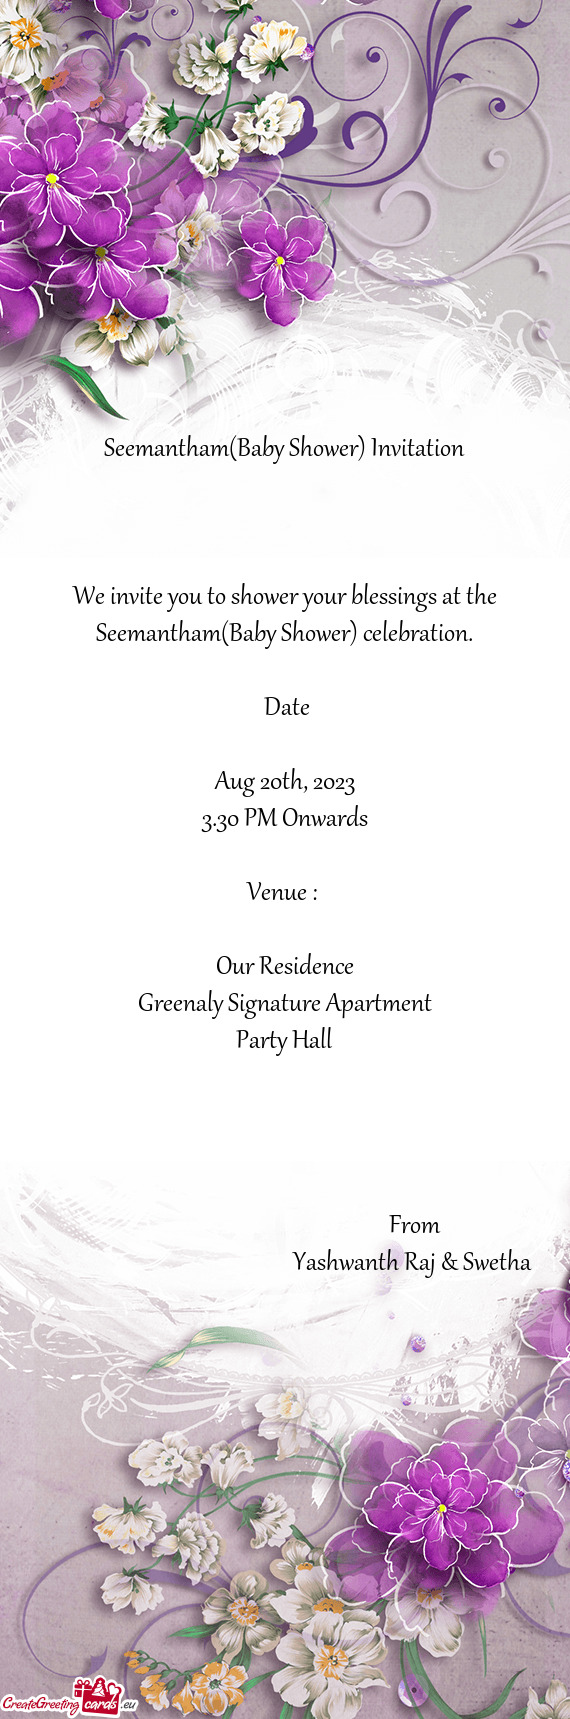 Greenaly Signature Apartment